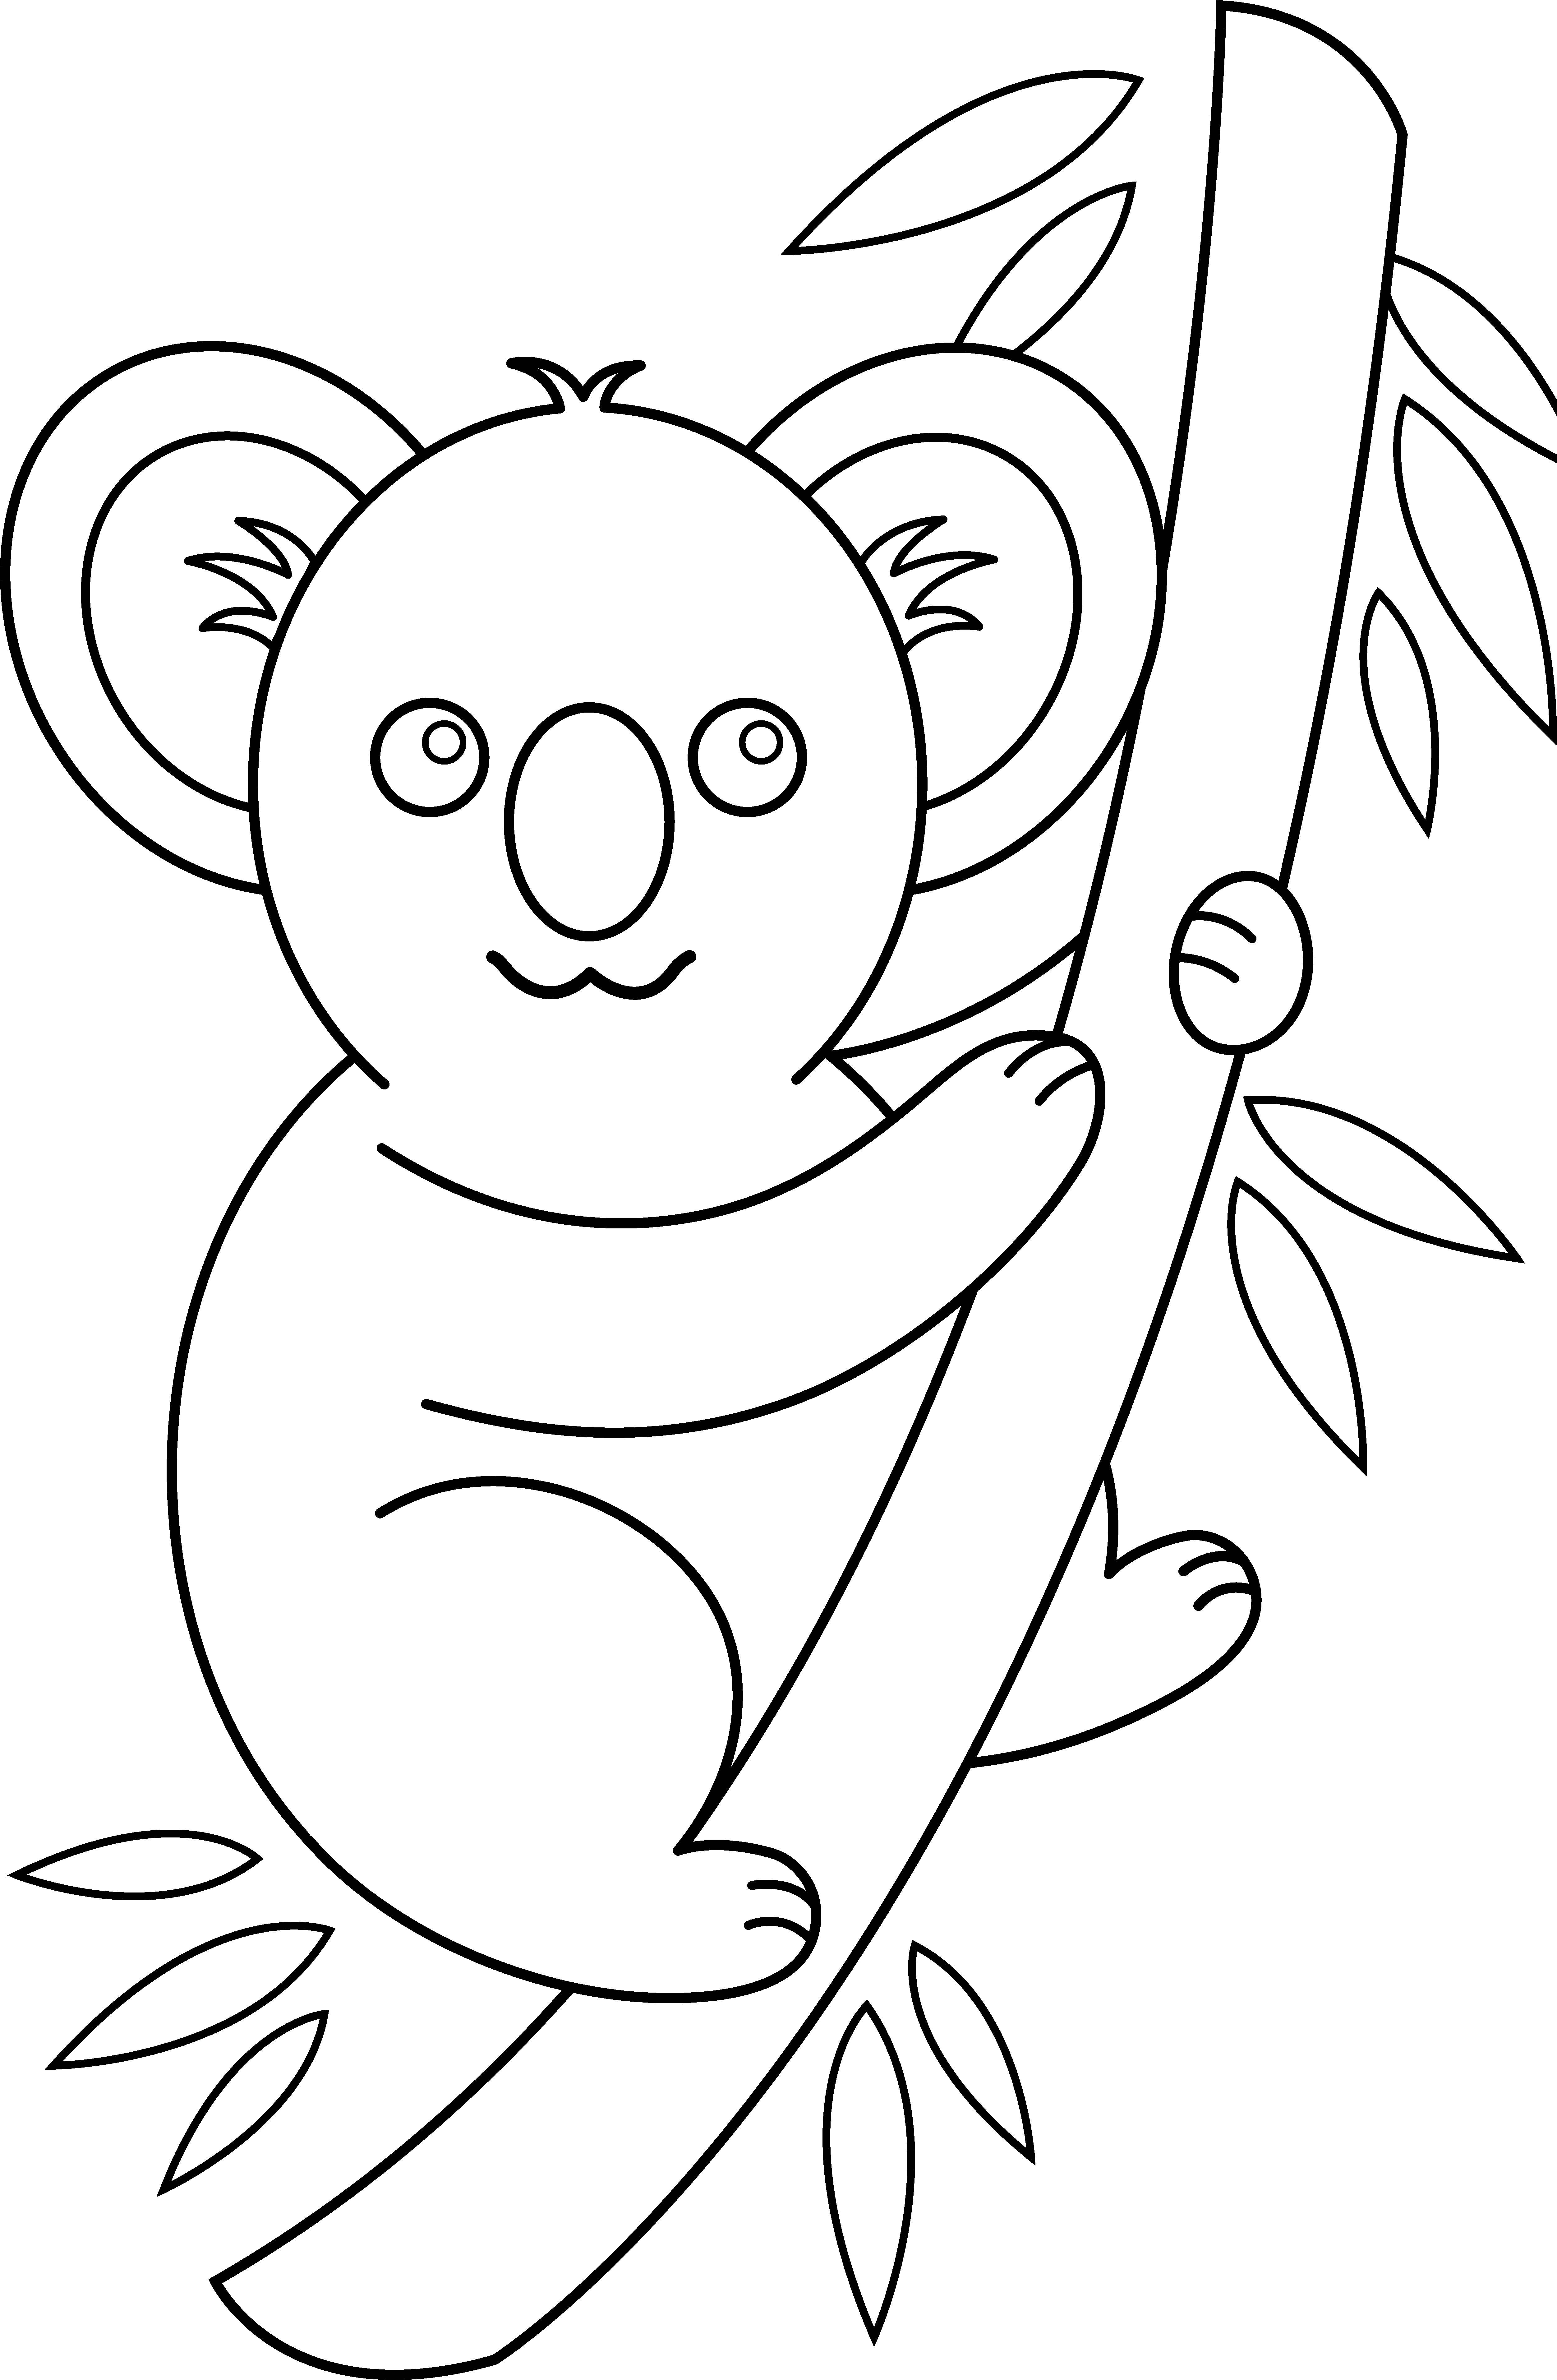 koala coloring page id 105128 : Uncategorized - yoand.